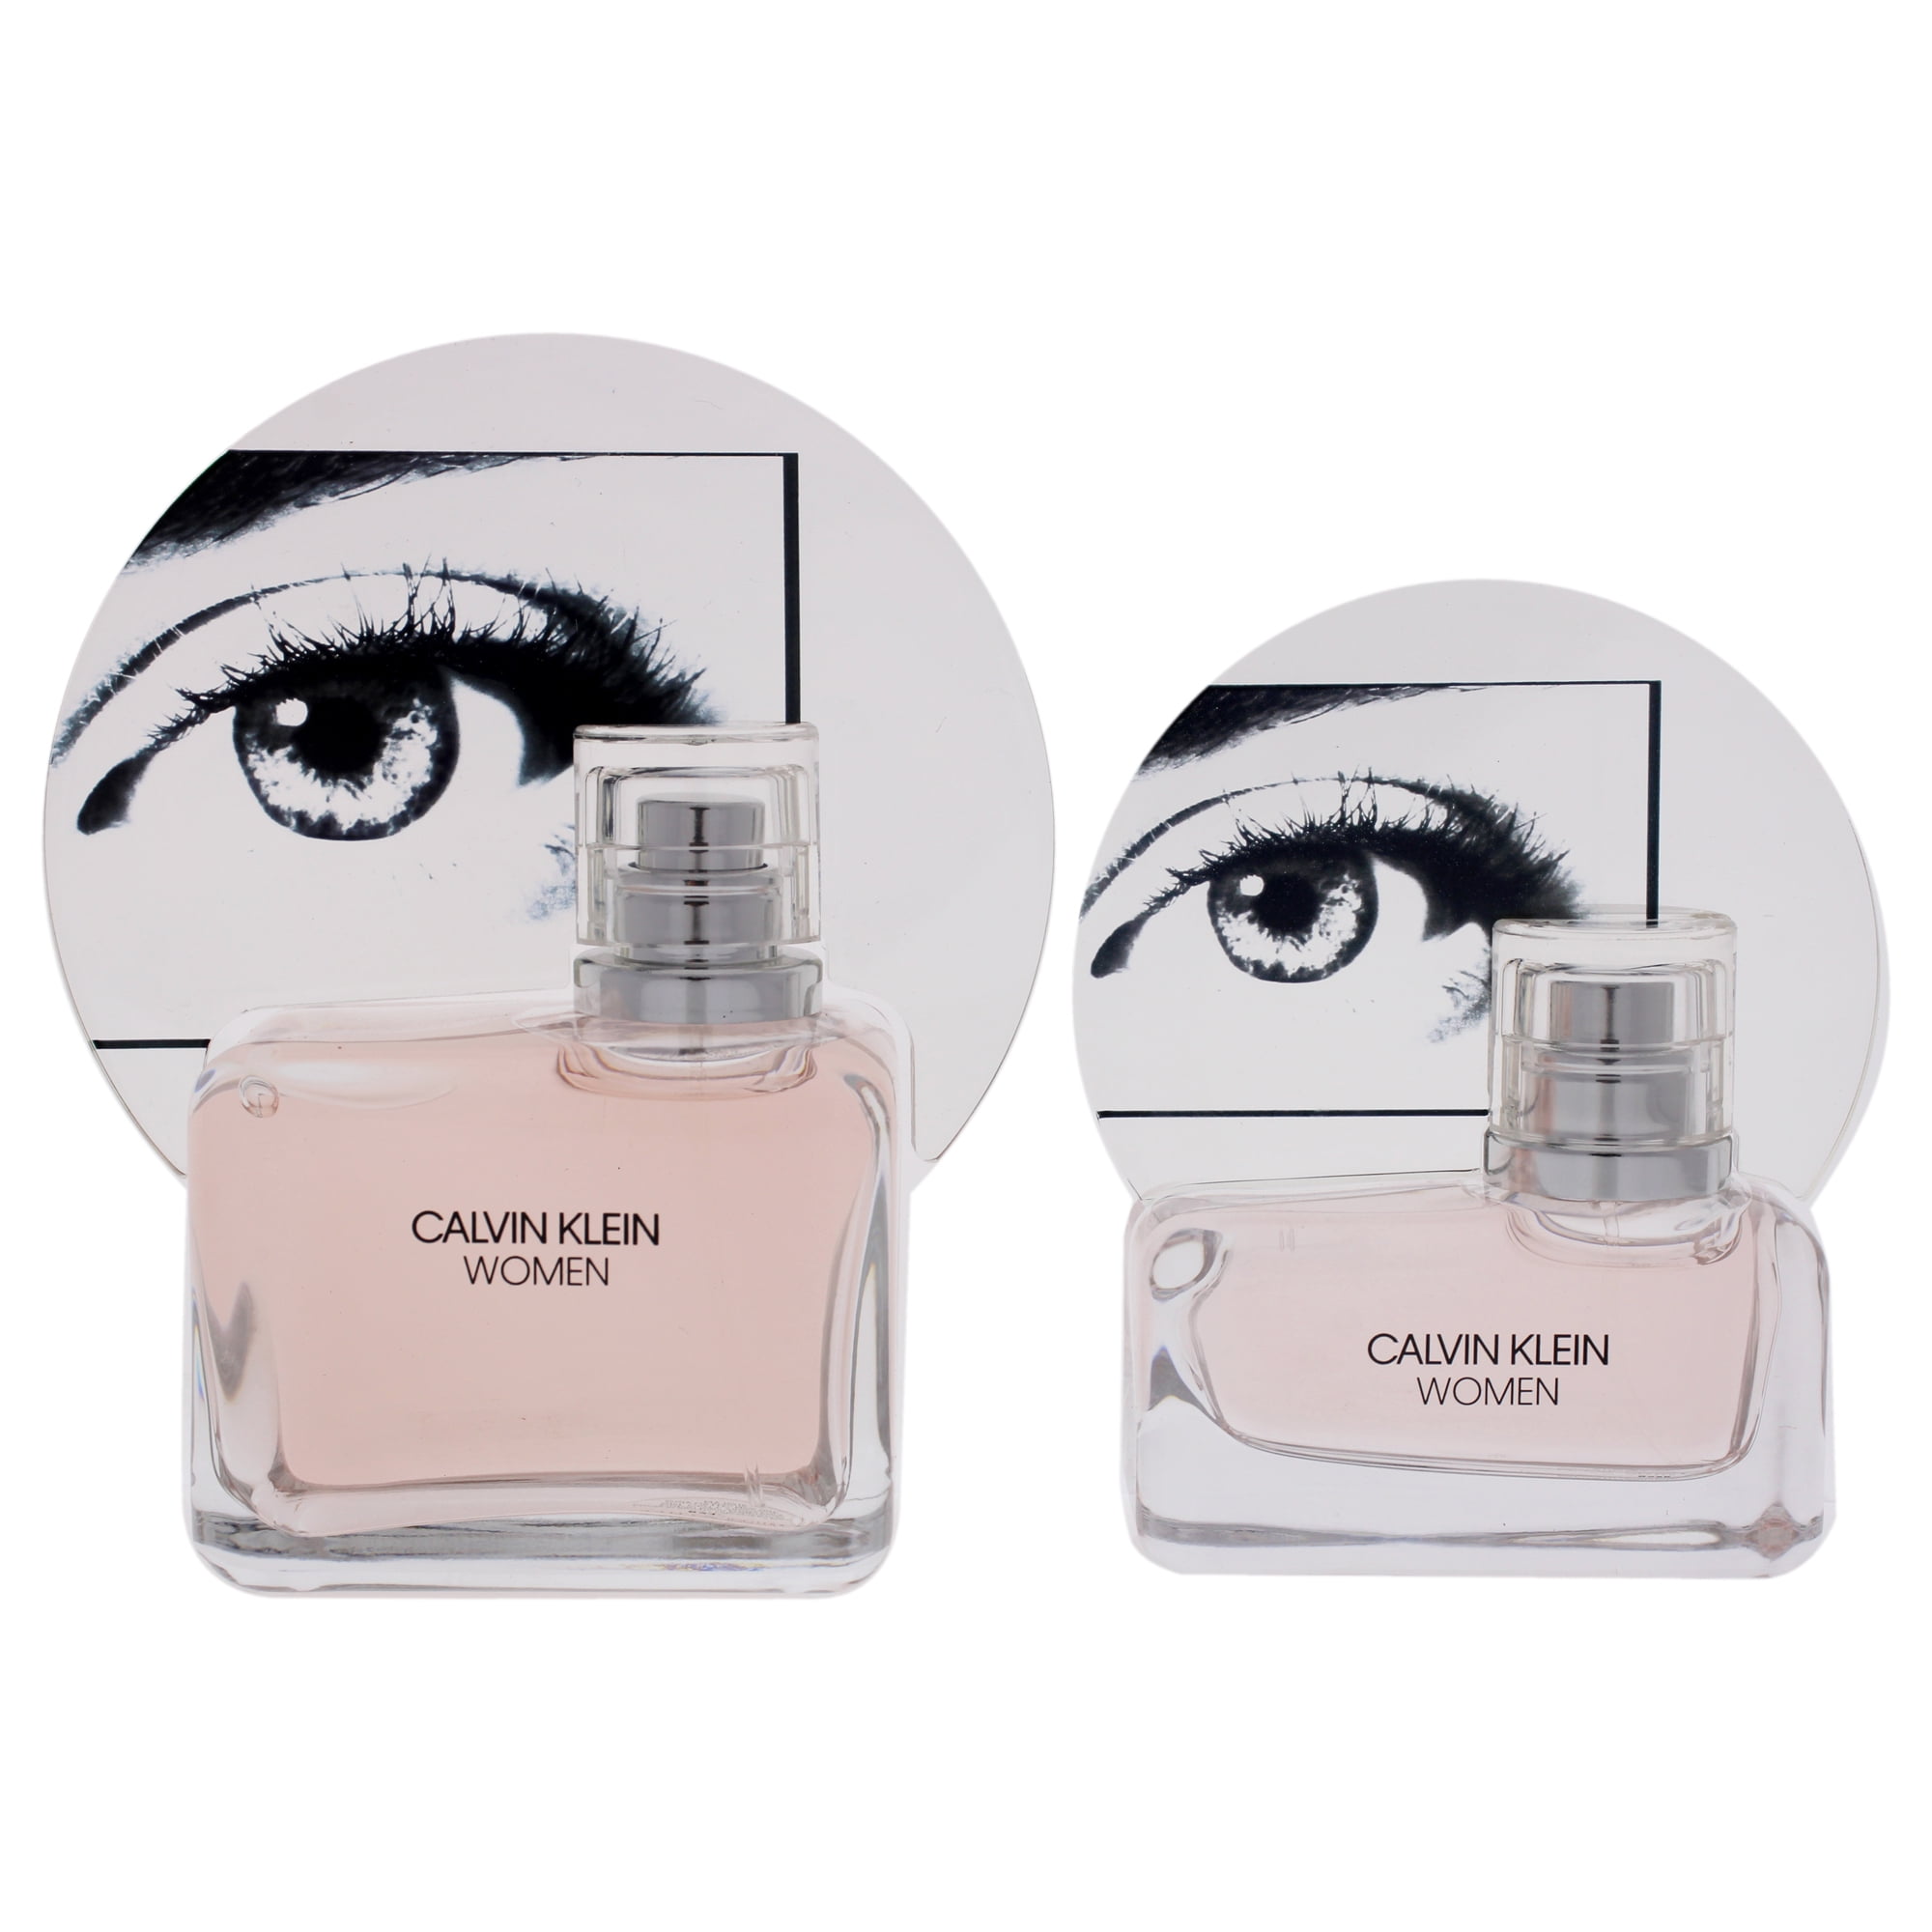 Perfume CK Gift Klein Calvin Pieces Women for Set 2 Women,